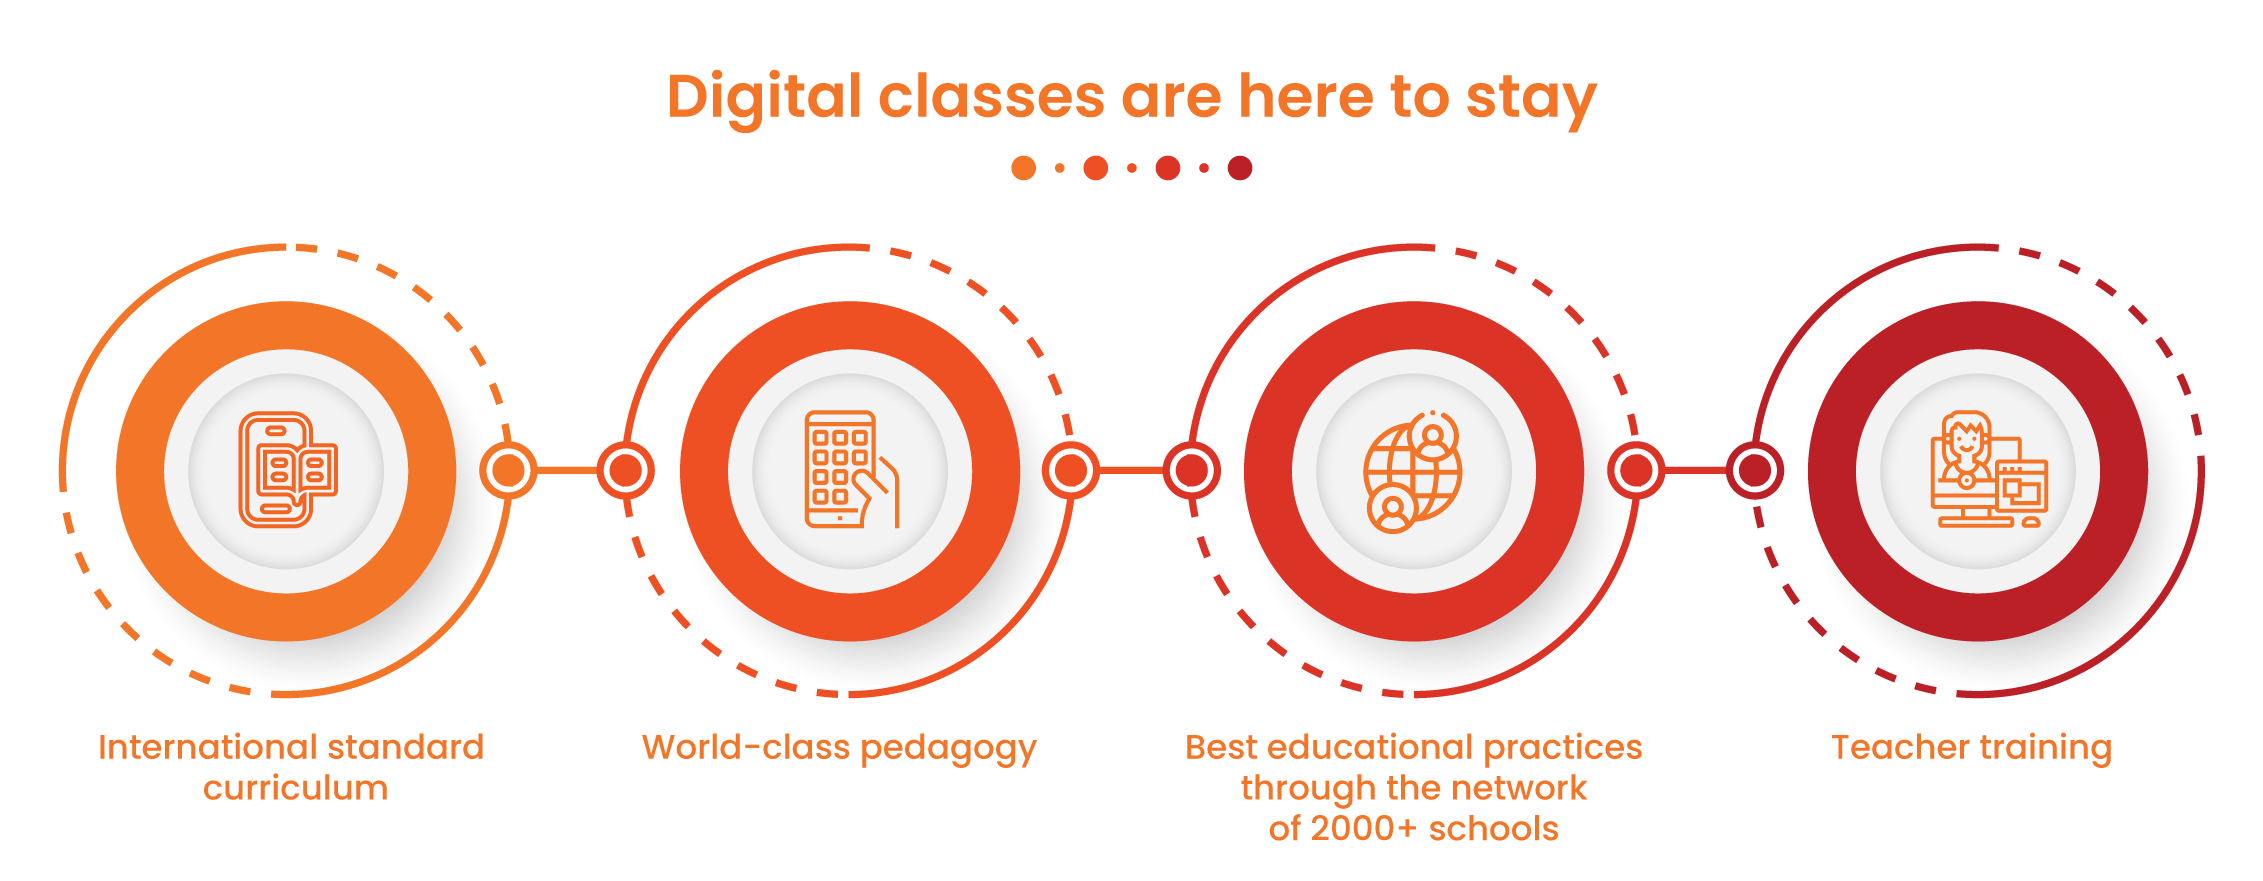 digital classes in schools